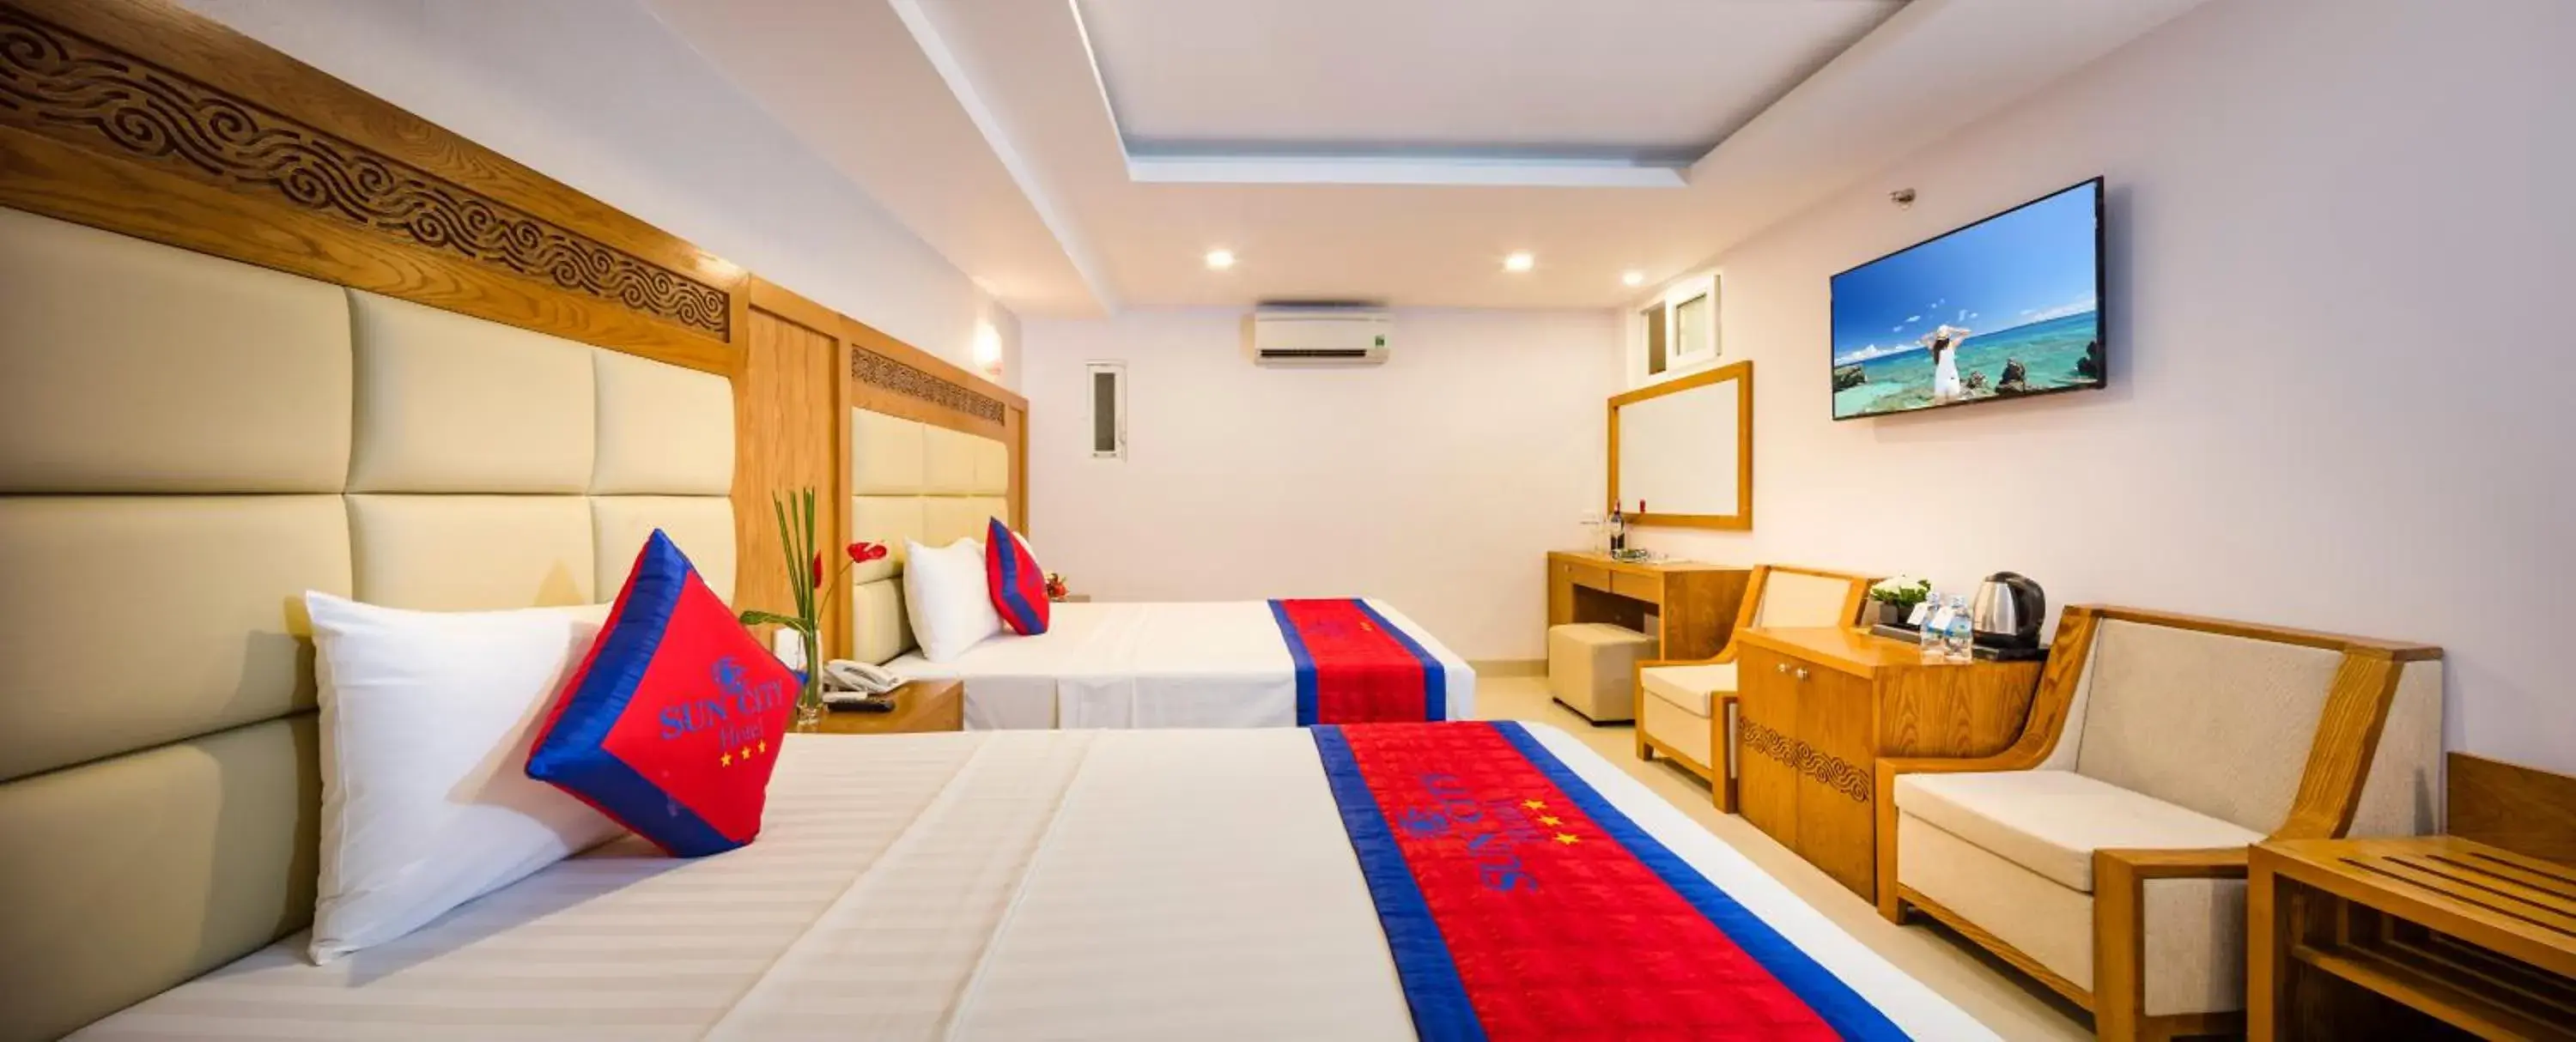 Bedroom in Sun City Hotel